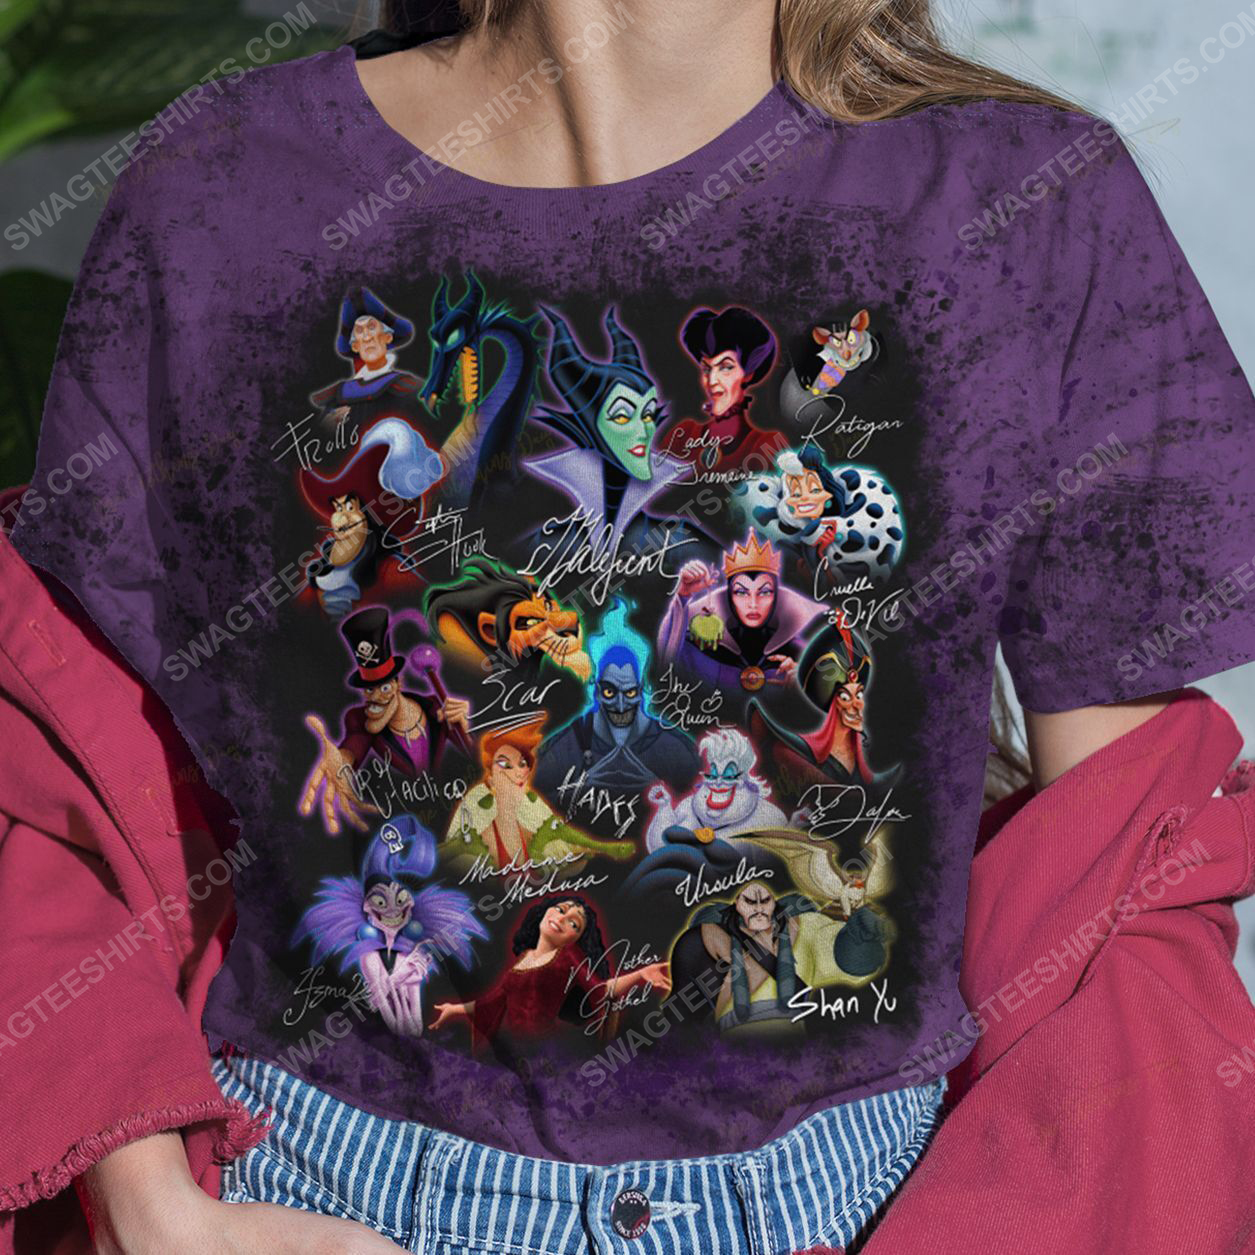 Iconic disney villains characters halloween night shirt 5(1)